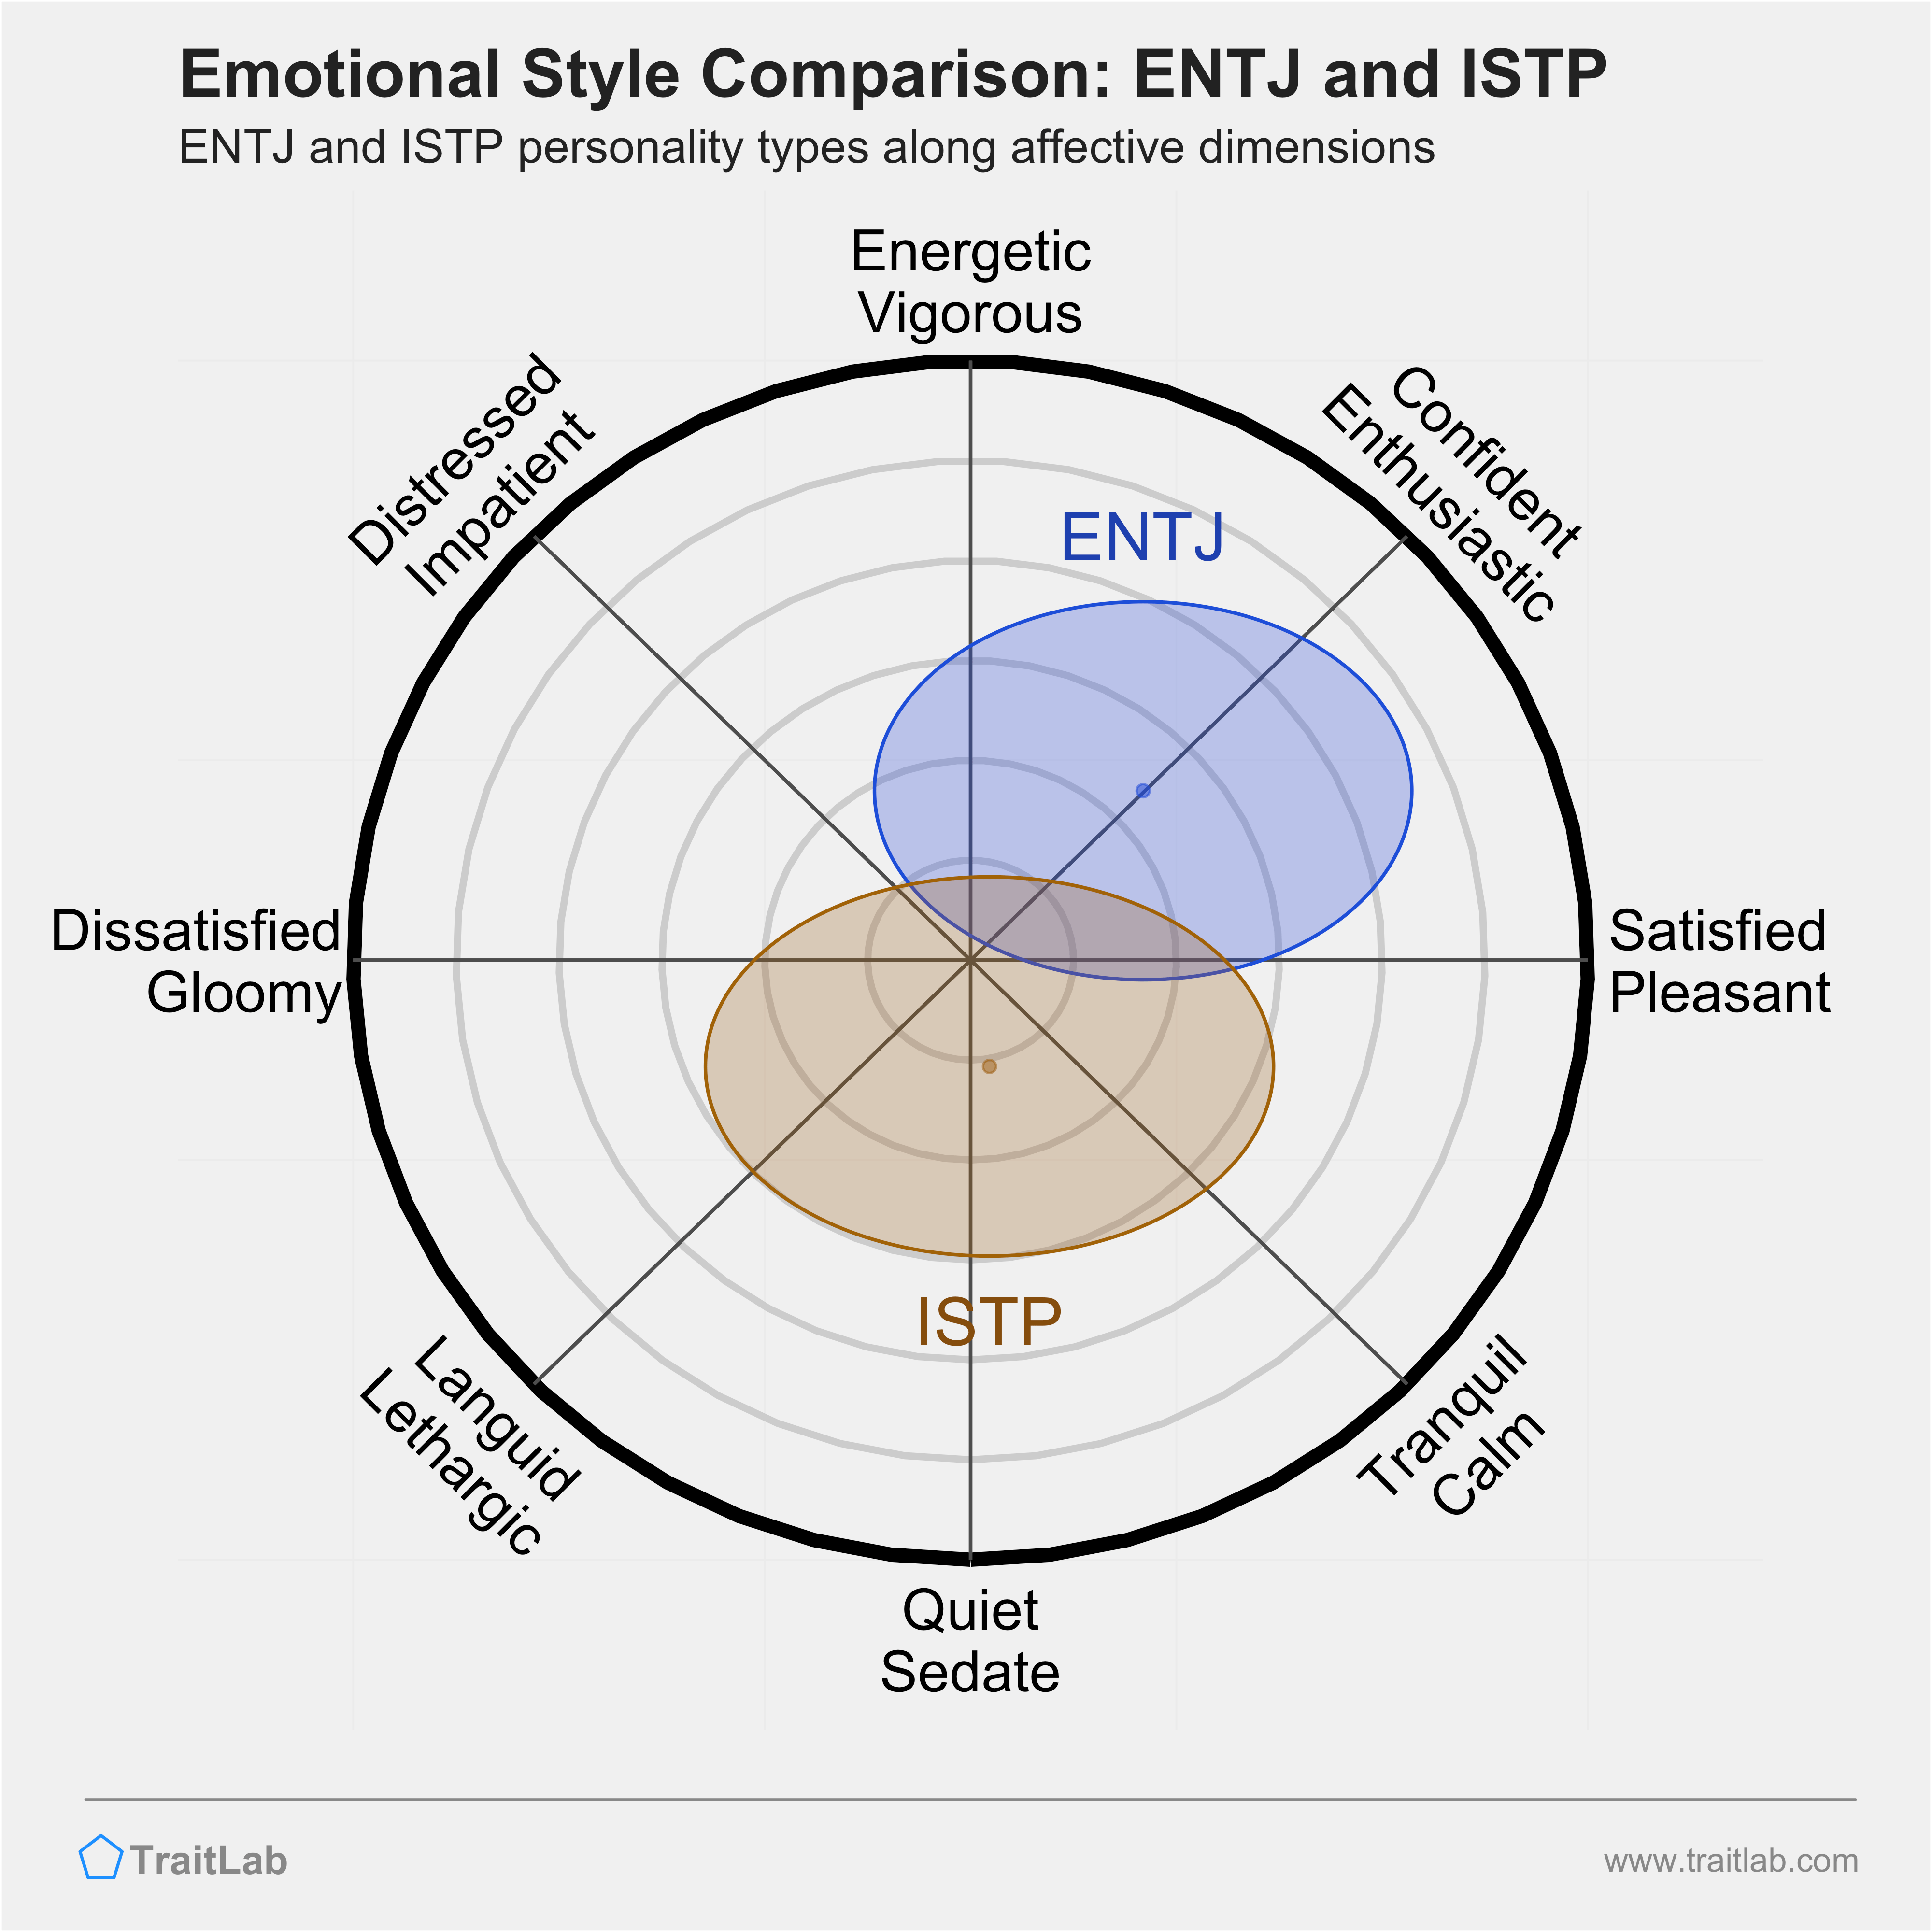 ENTJ and ISTP comparison across emotional (affective) dimensions